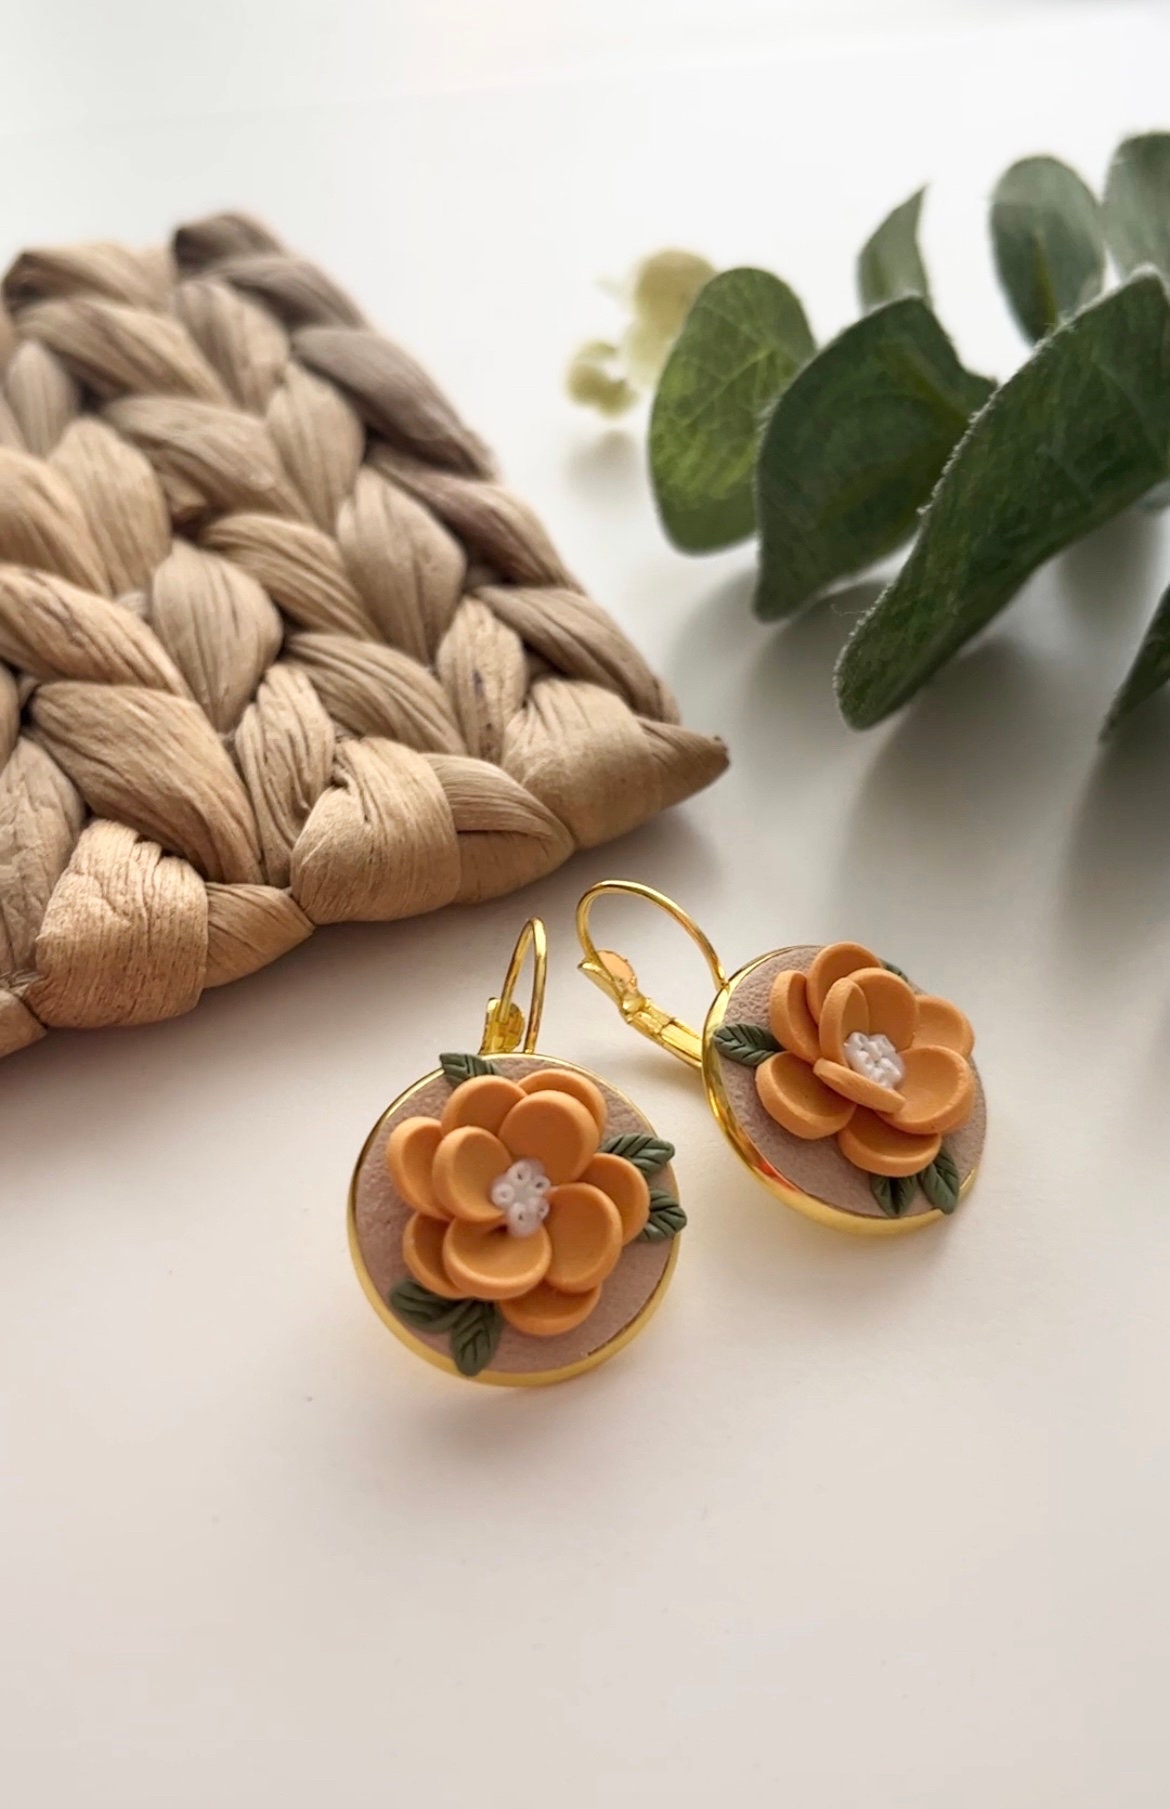 French Hoop Clay Earrings[?] Botanical Earrings[?]Polymer Earrings[?]statement Earrings[?]Floral[?]Handmade[?]Lightweight